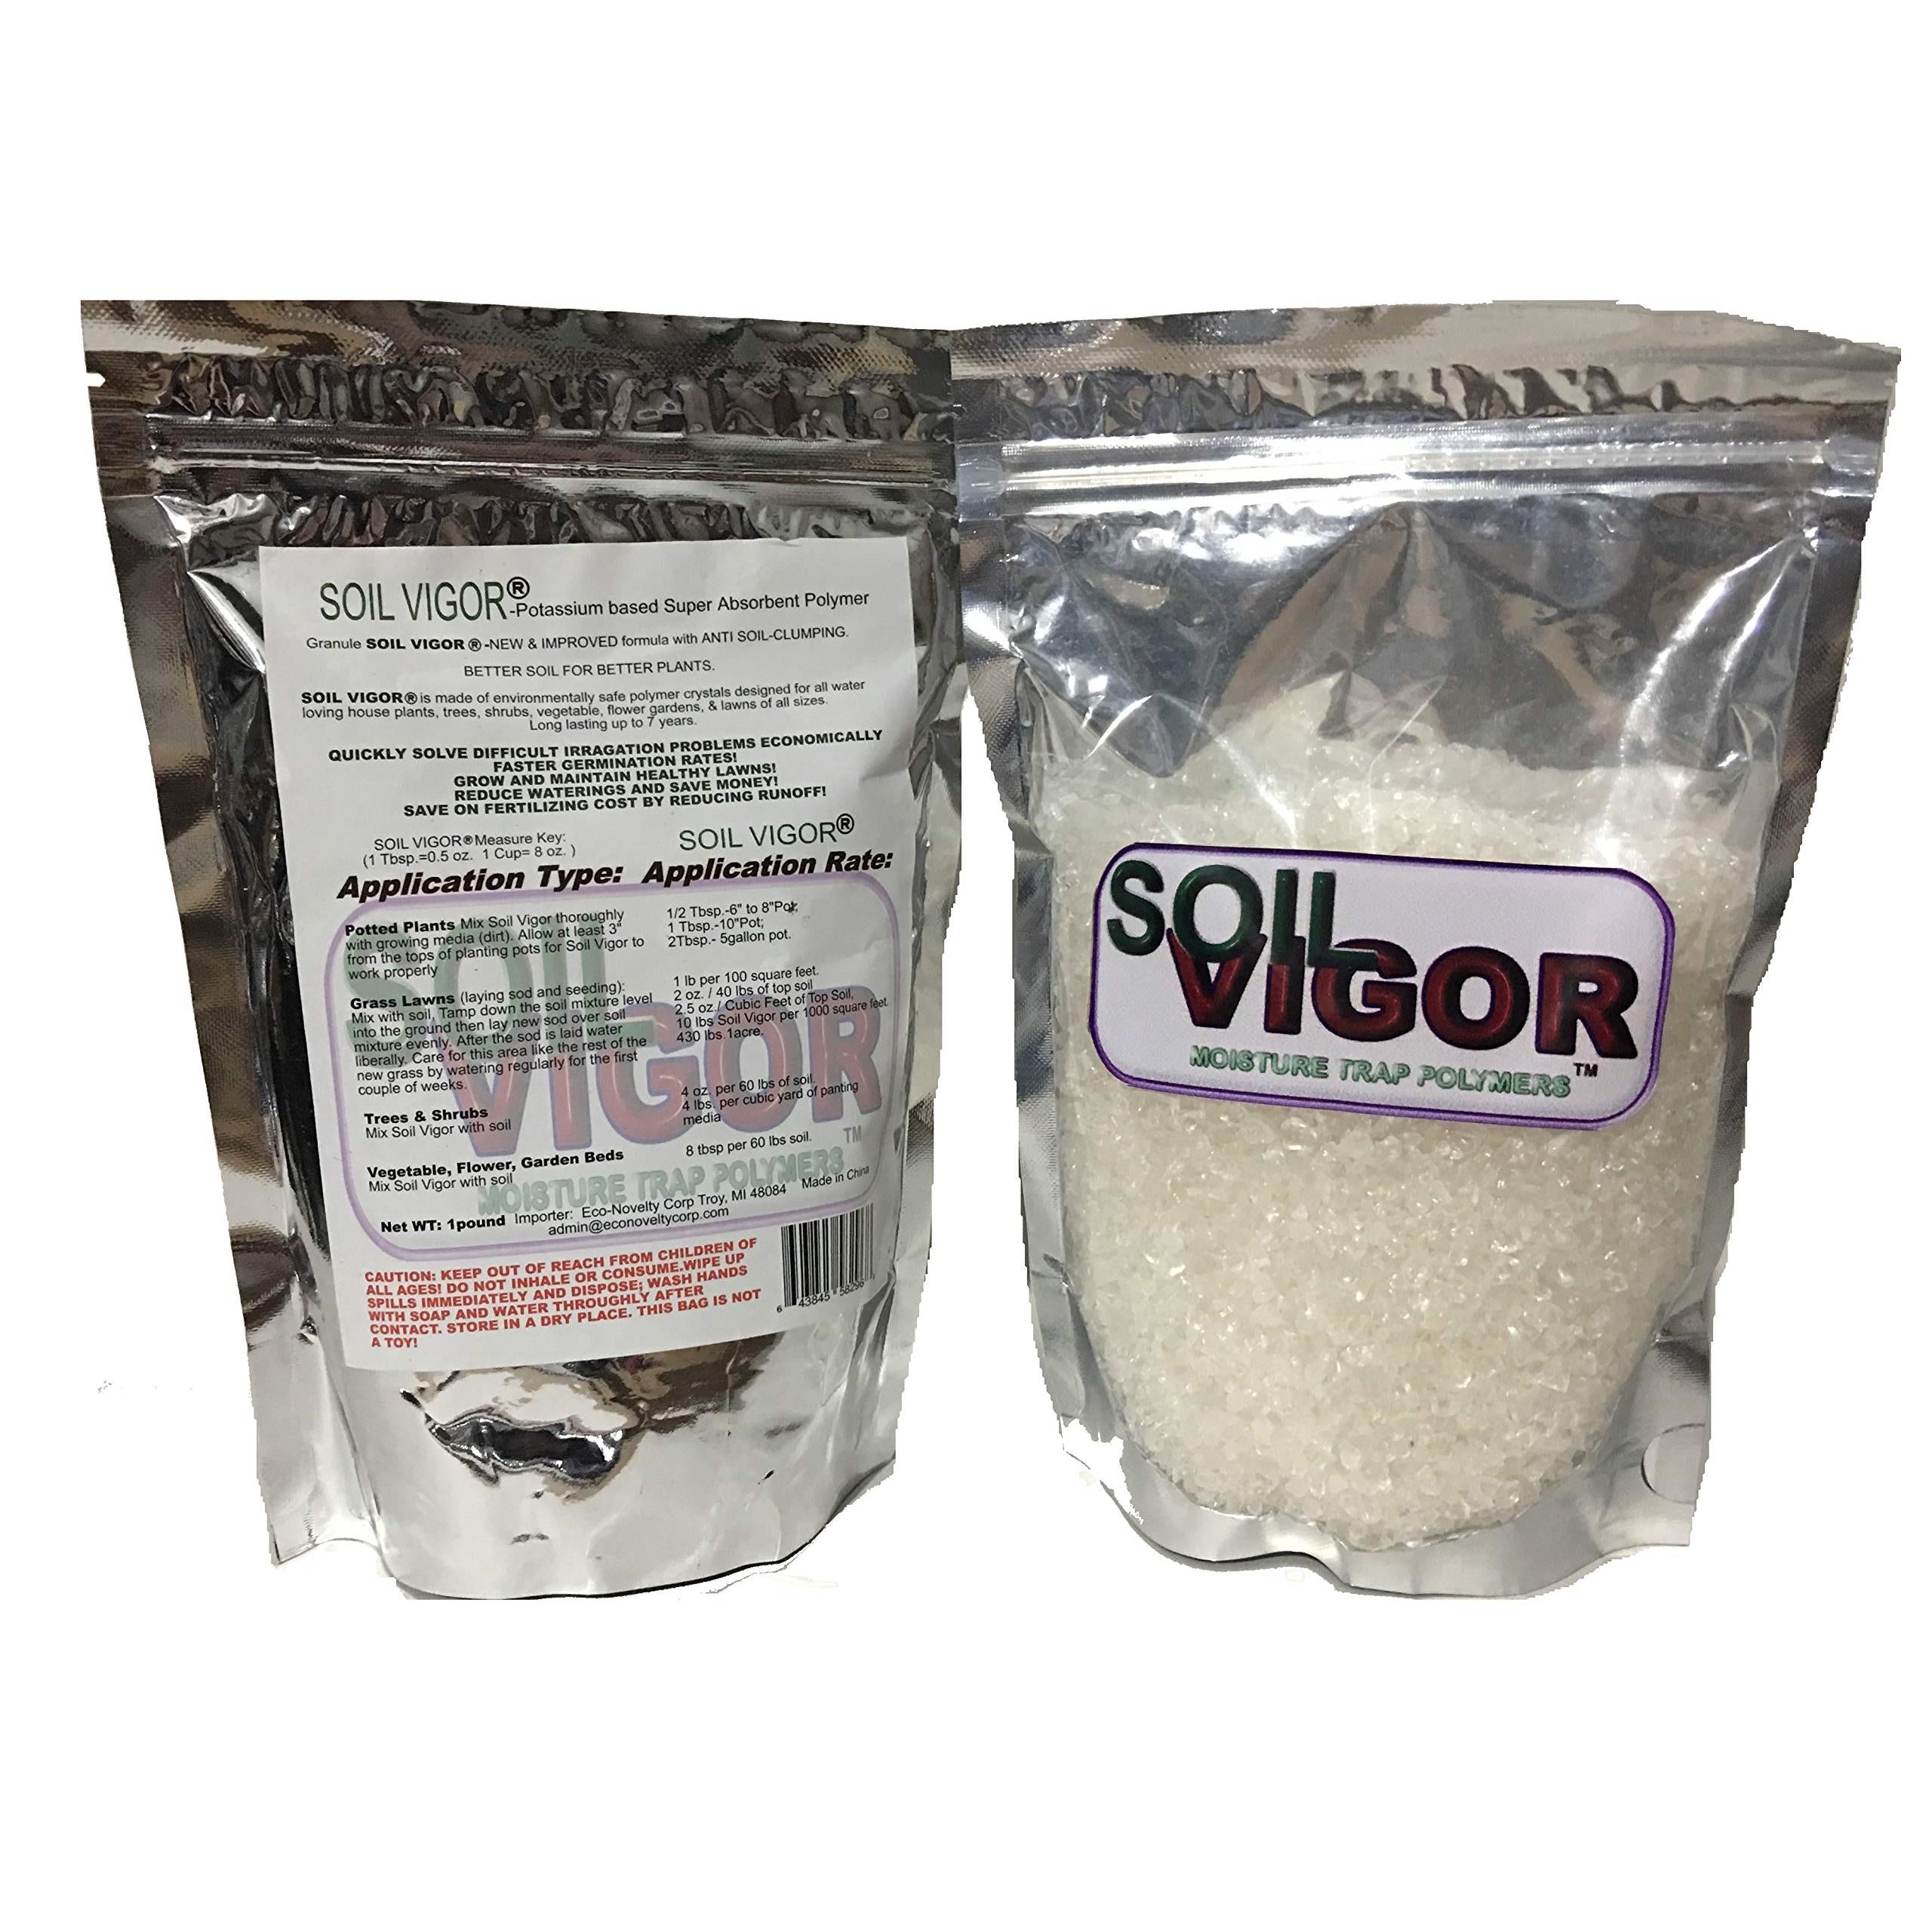 2 Lb. Soil Vigor Super Absorbent Polymer, Moisture Trap For Trees, Shrubs, Vegetable, Flower Gardens, Lawns, And Potting Plants